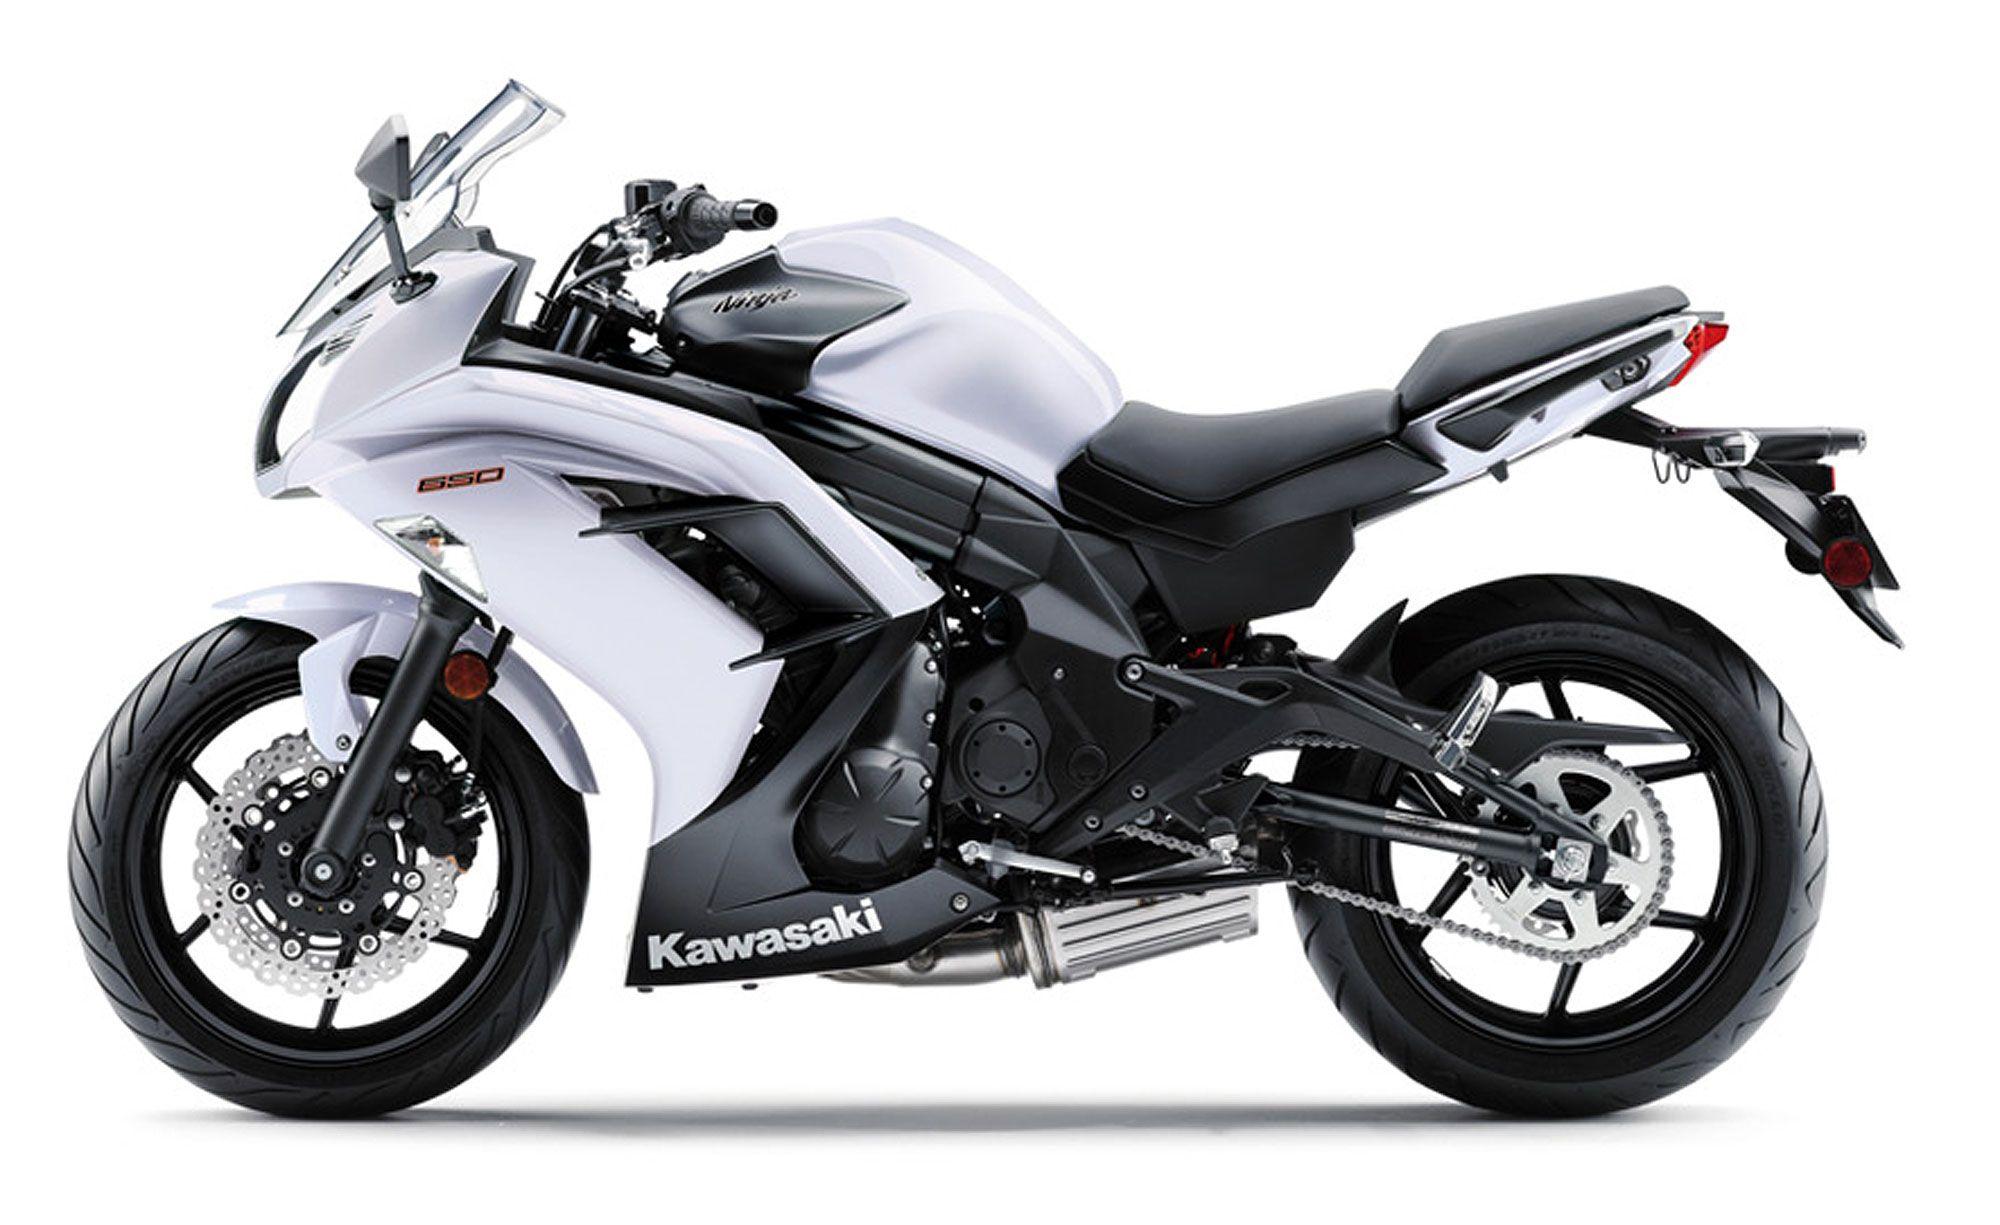 Kawasaki Ninja 650 White Color 8900 Hi Resolution. Best Free JPG